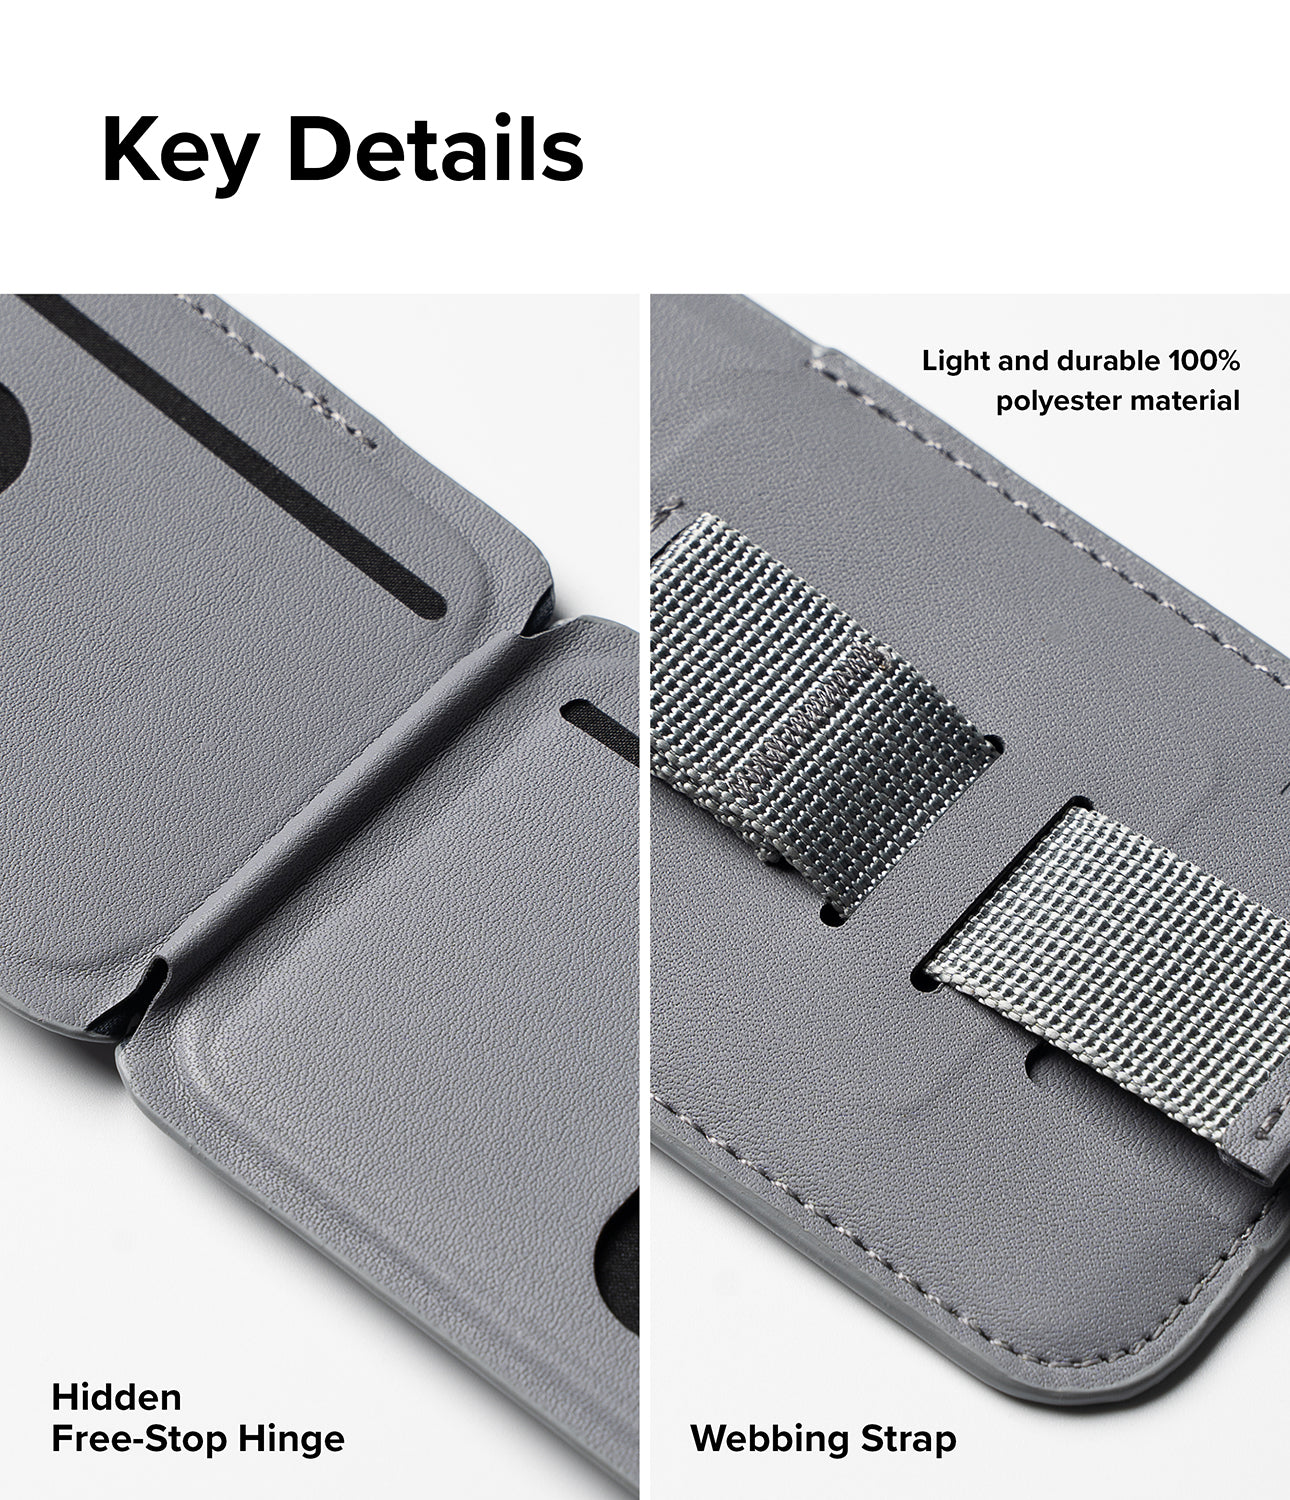 Ringke Stand Grip Magnetic Card Holder Wallet - Key Details. Hidden Free-Stop Hinge. Light and durable 100% polyester material. Webbing Strap.